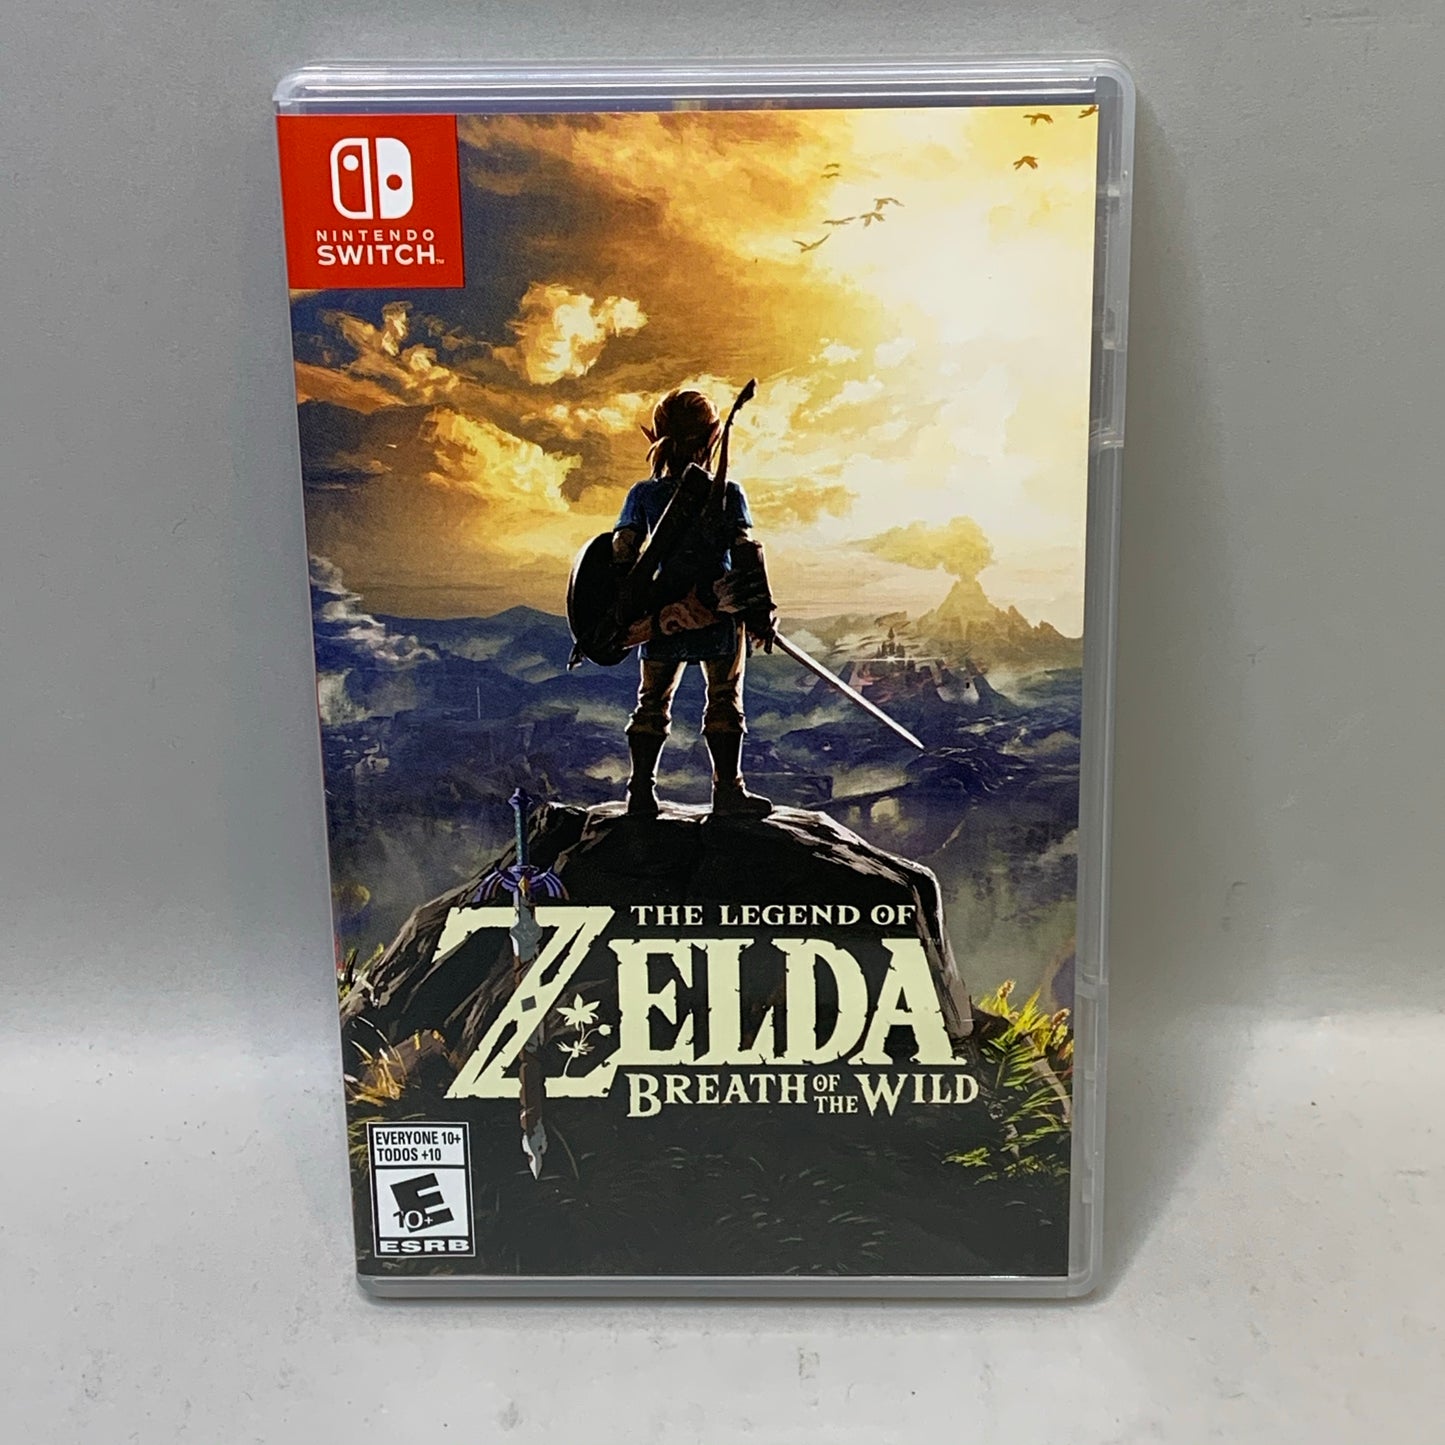 The Legend of Zelda: Breath of The Wild (Nintendo Switch, 2017)